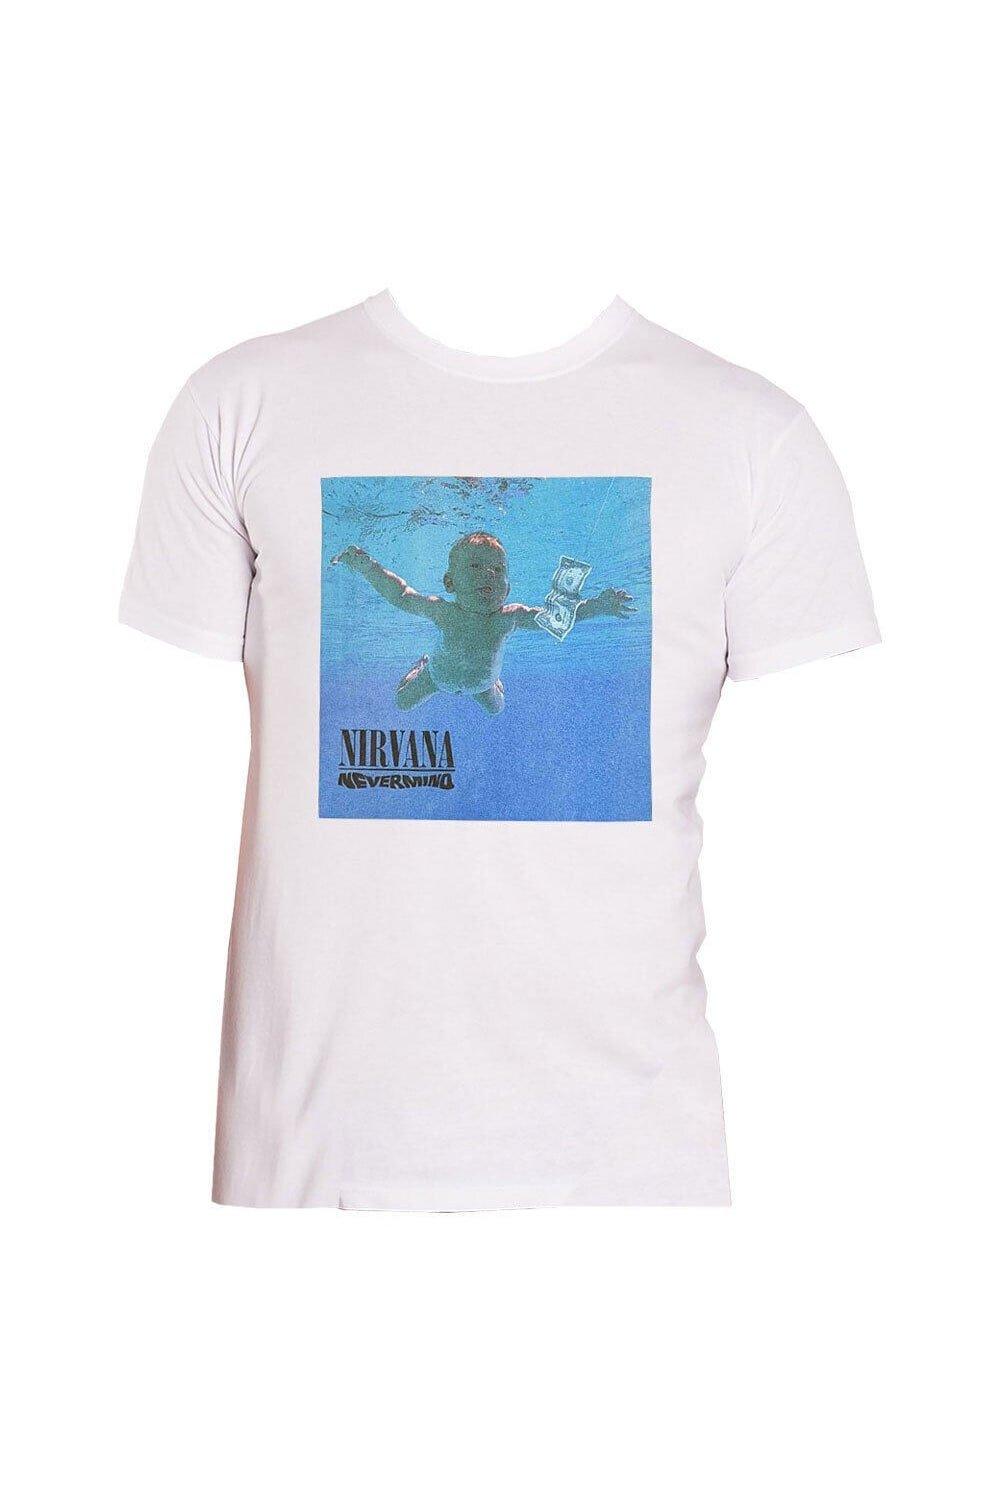 Хлопковая футболка Nevermind Album Nirvana, белый nirvana nevermind lp